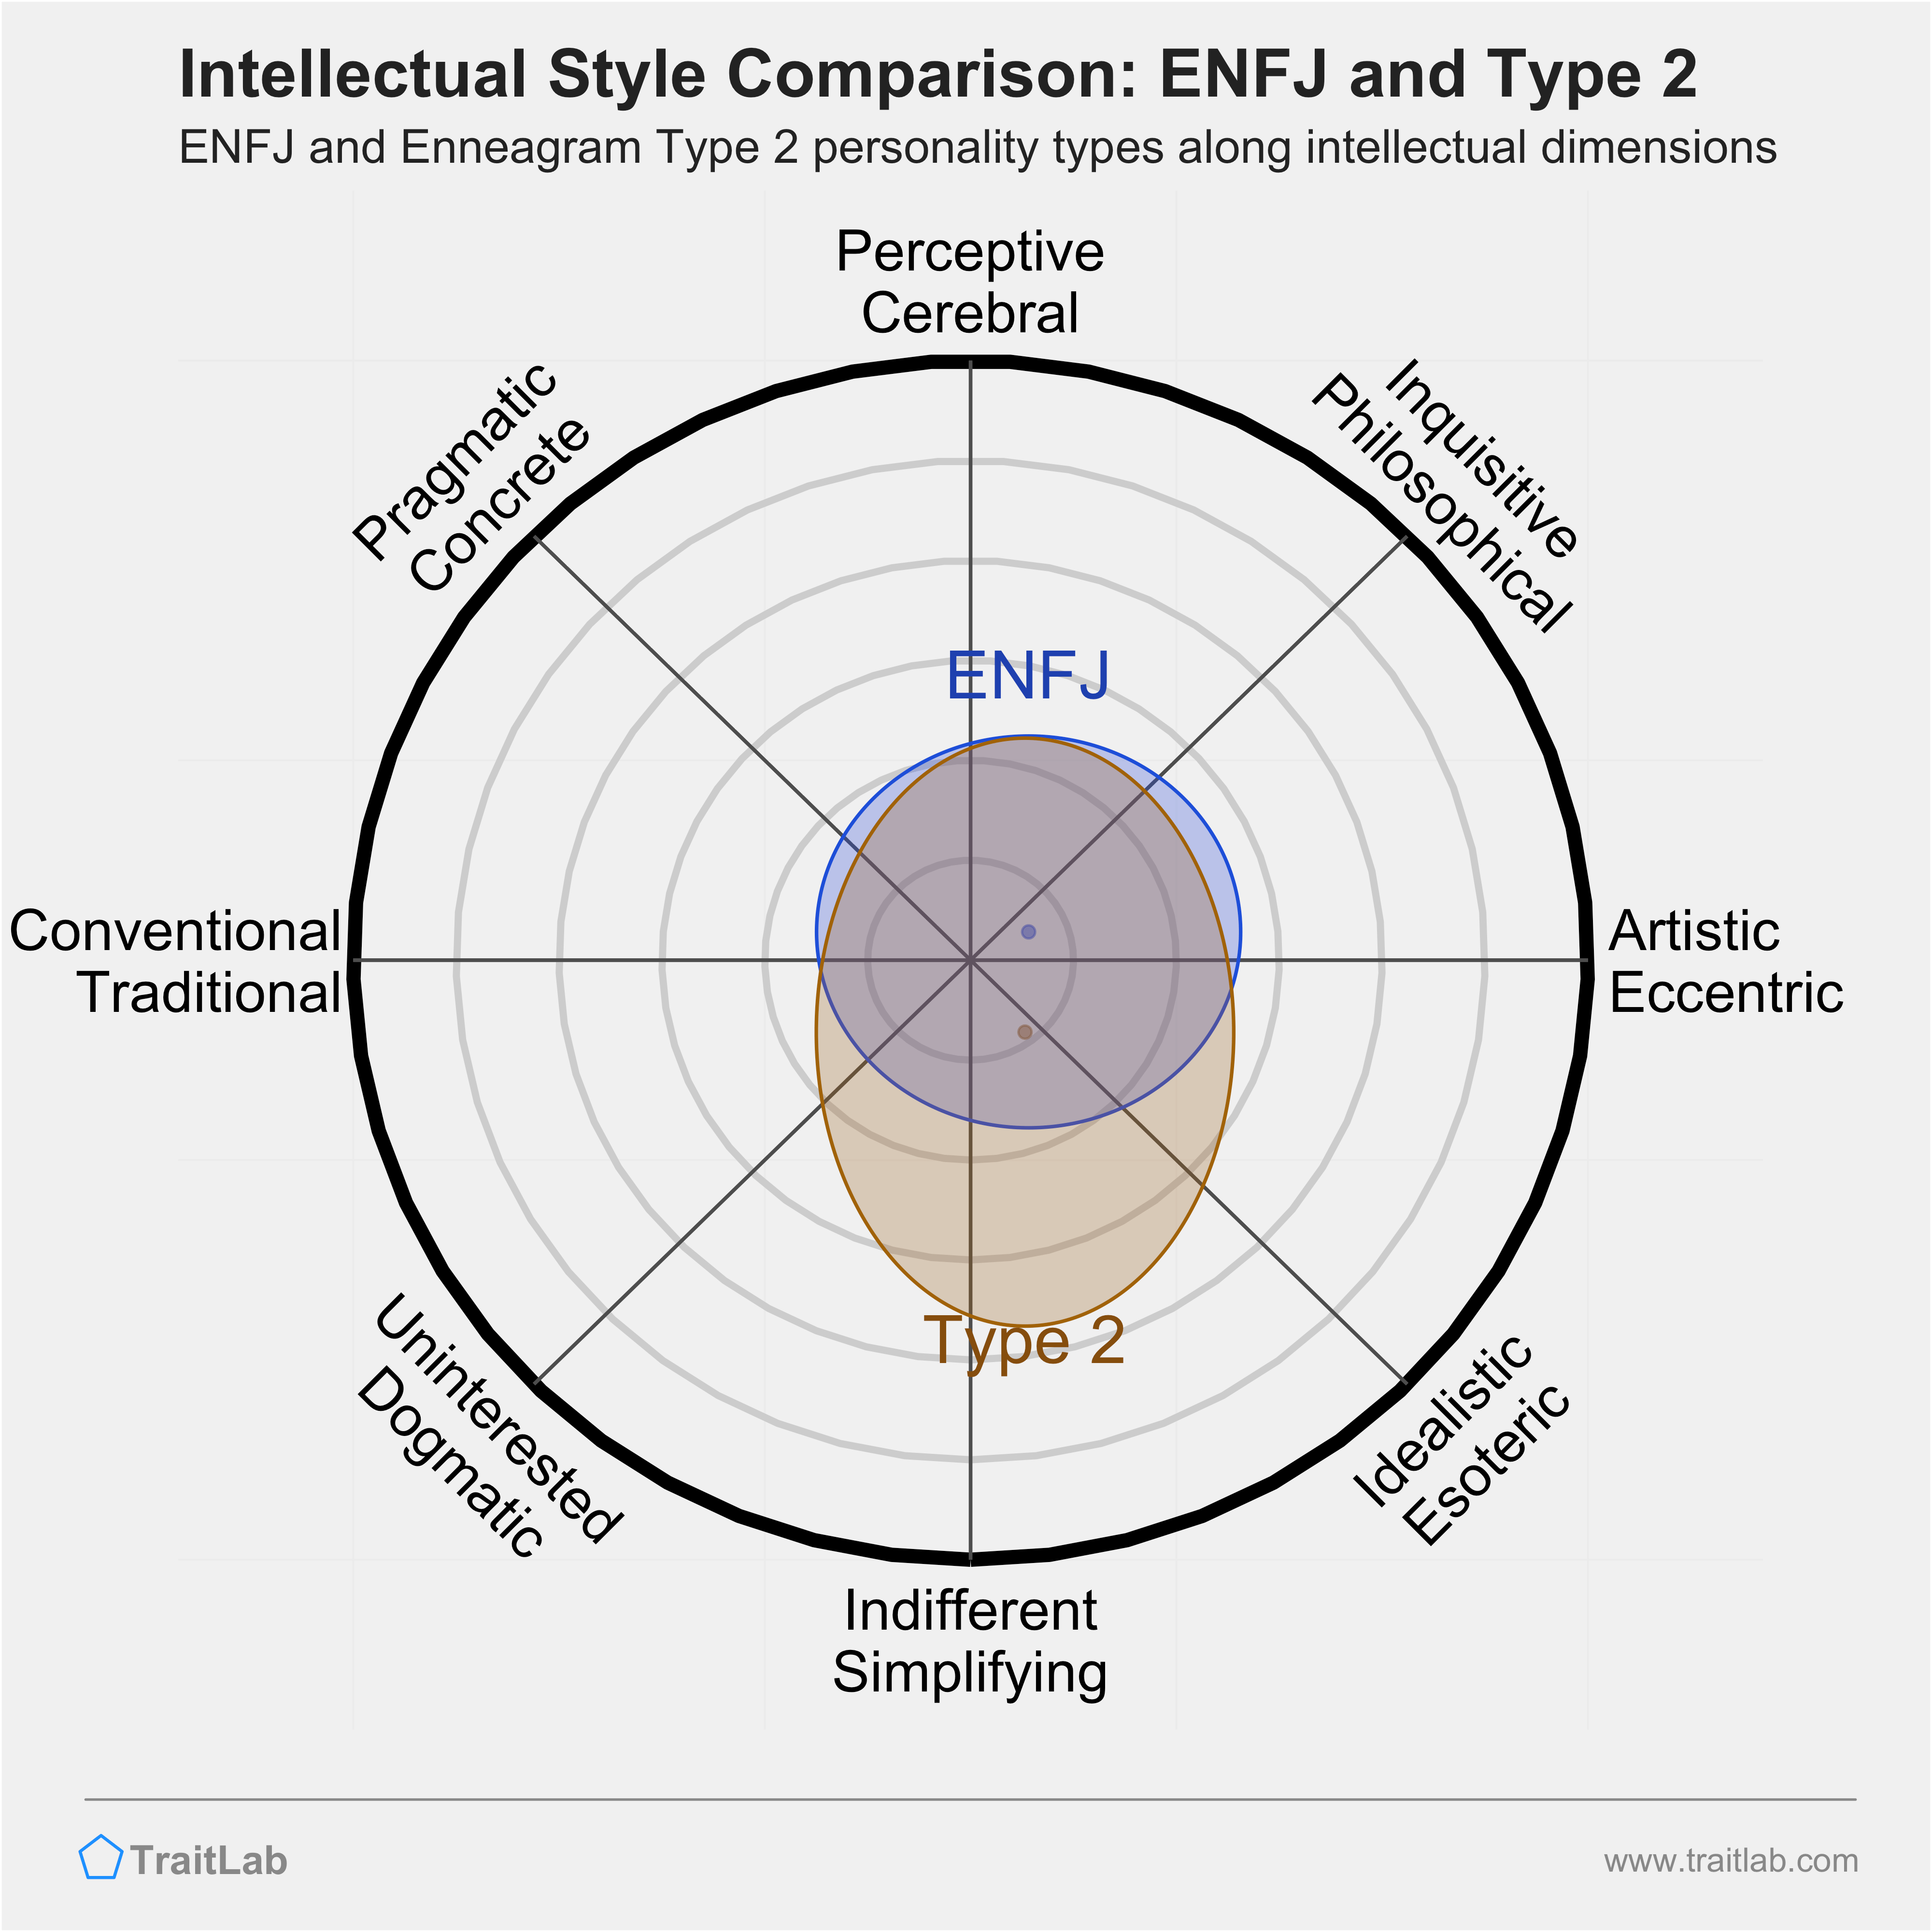 ENFJ and Type 2 comparison across intellectual dimensions